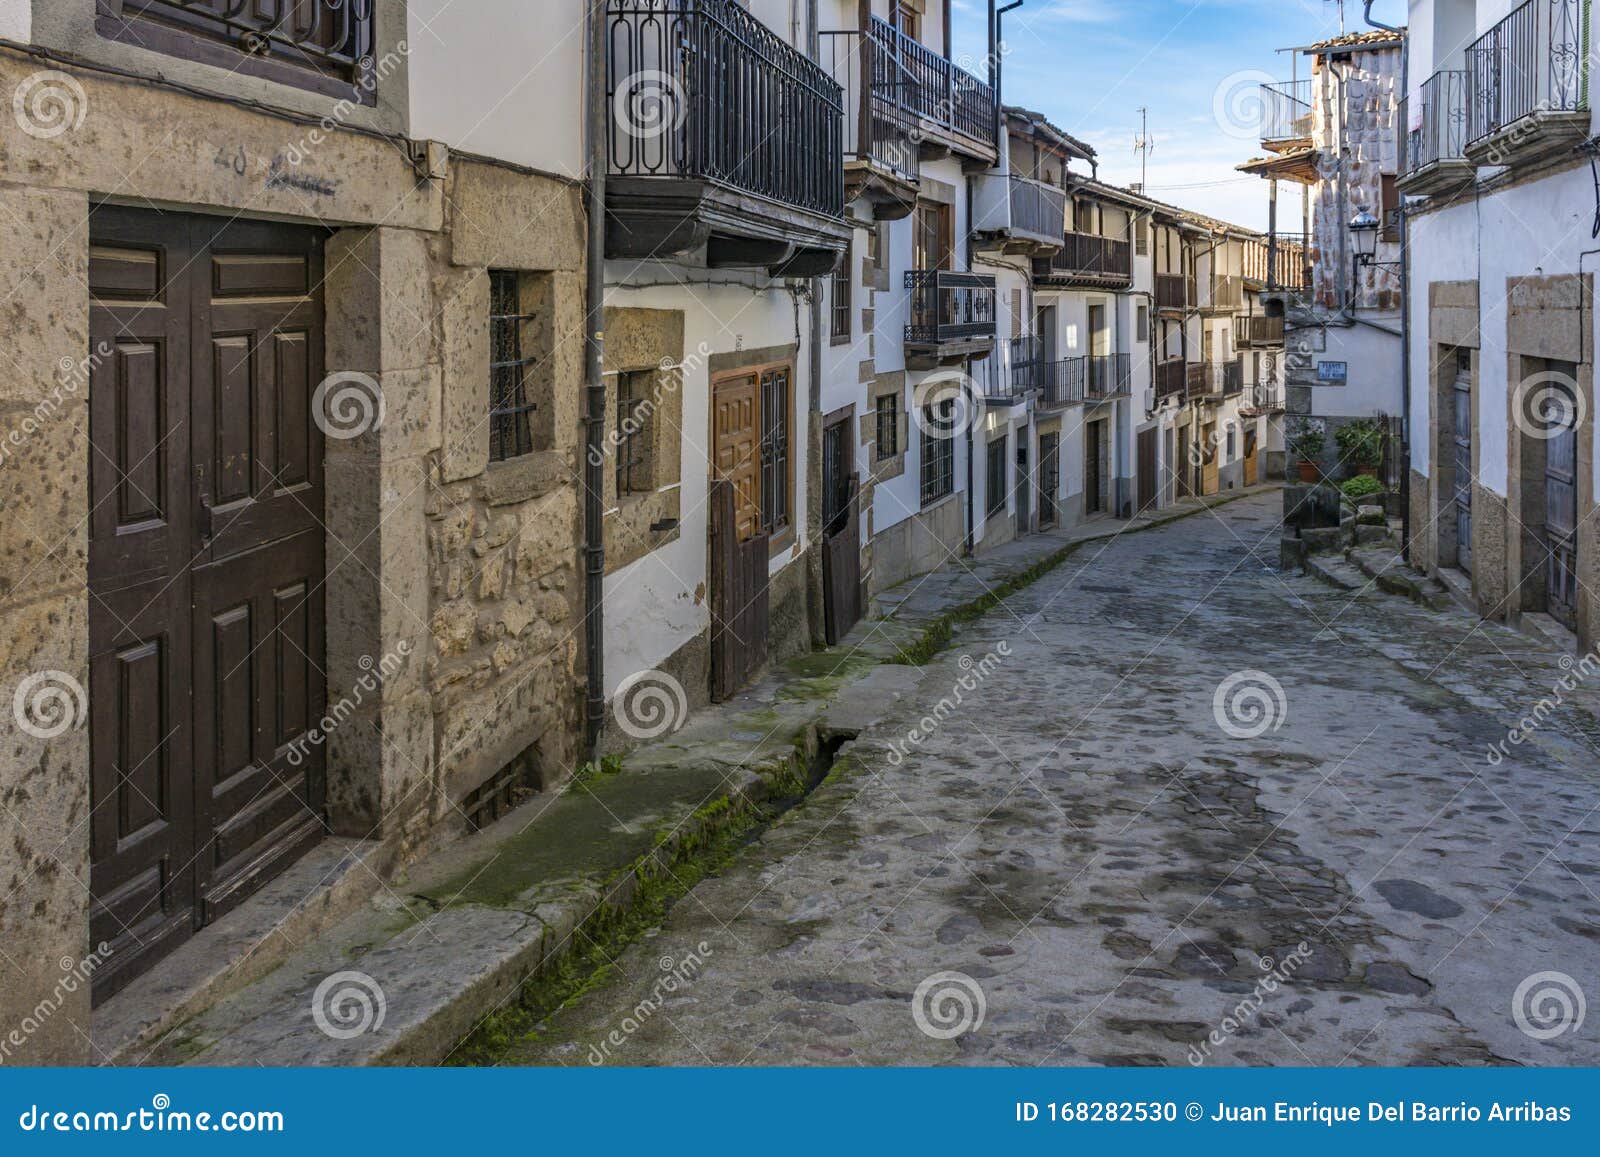 streets and architectural facades of candelario salamanca, spain